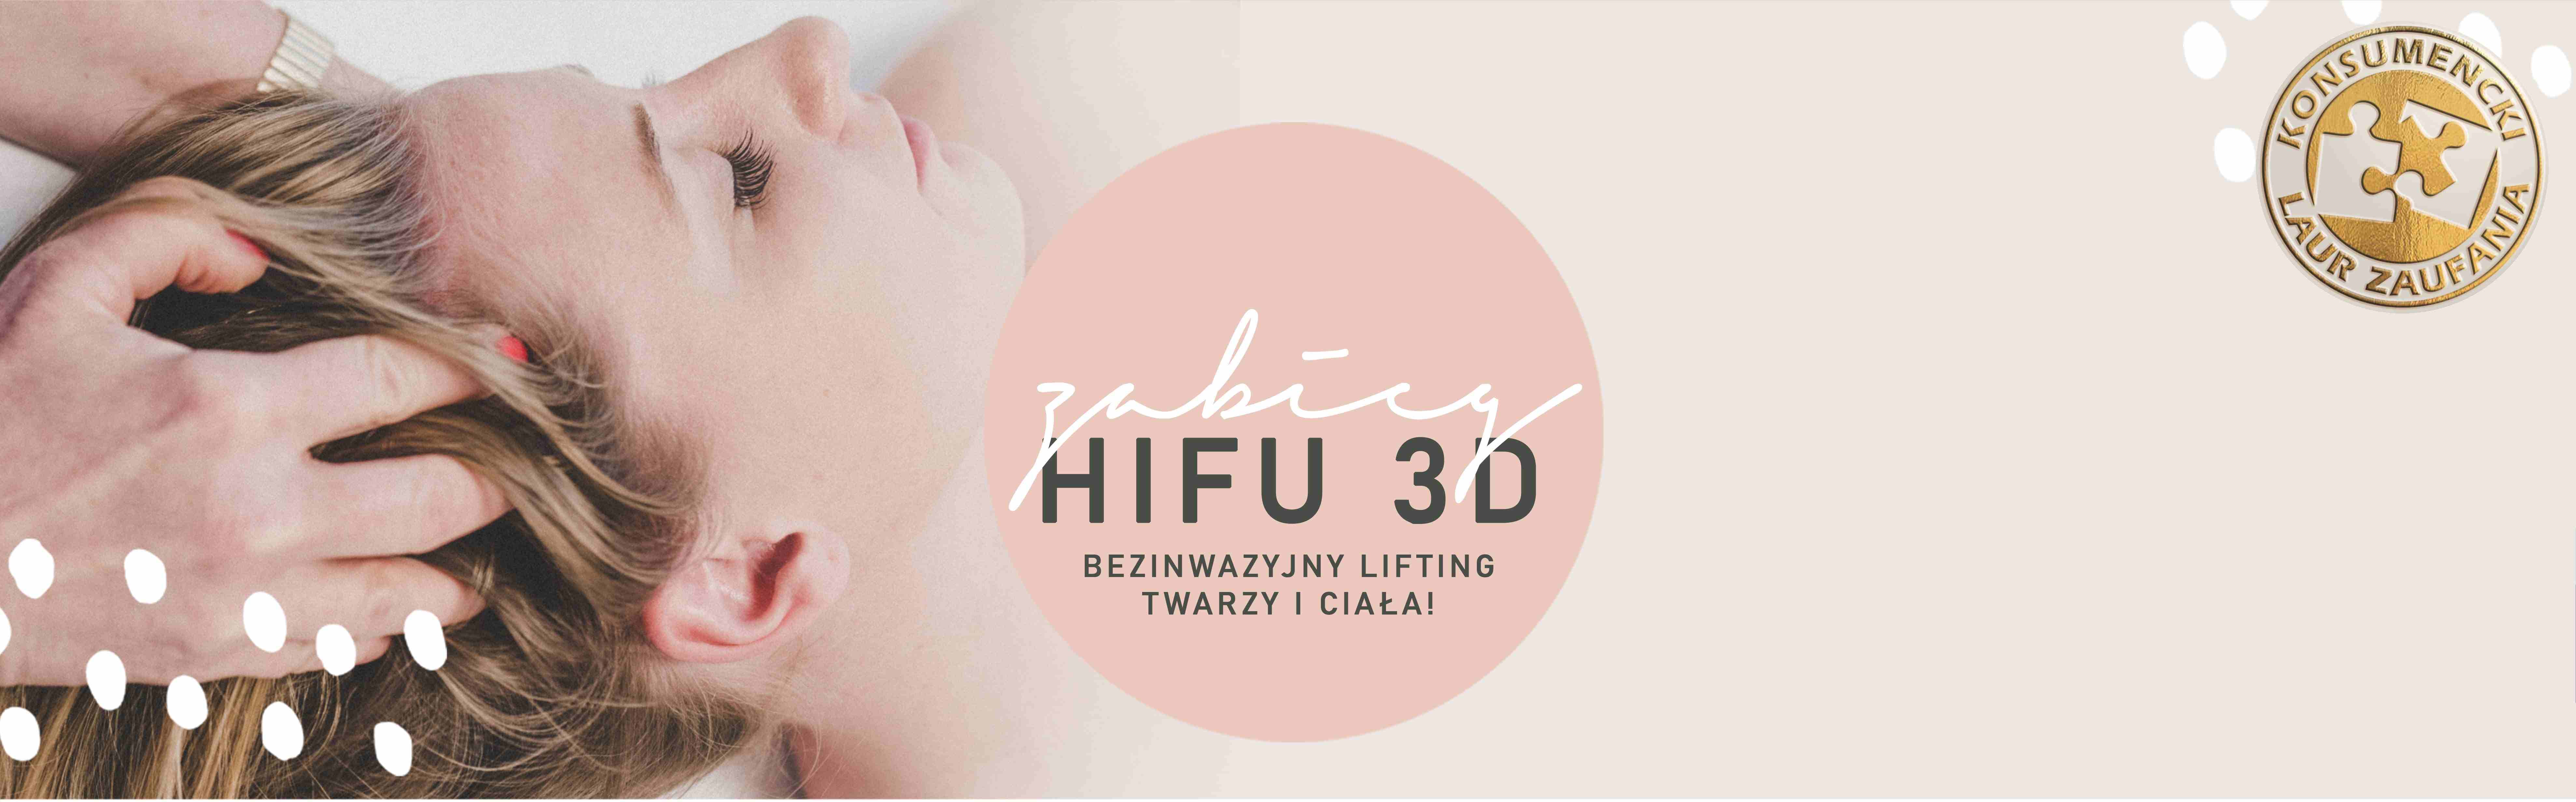 Hifu 3d